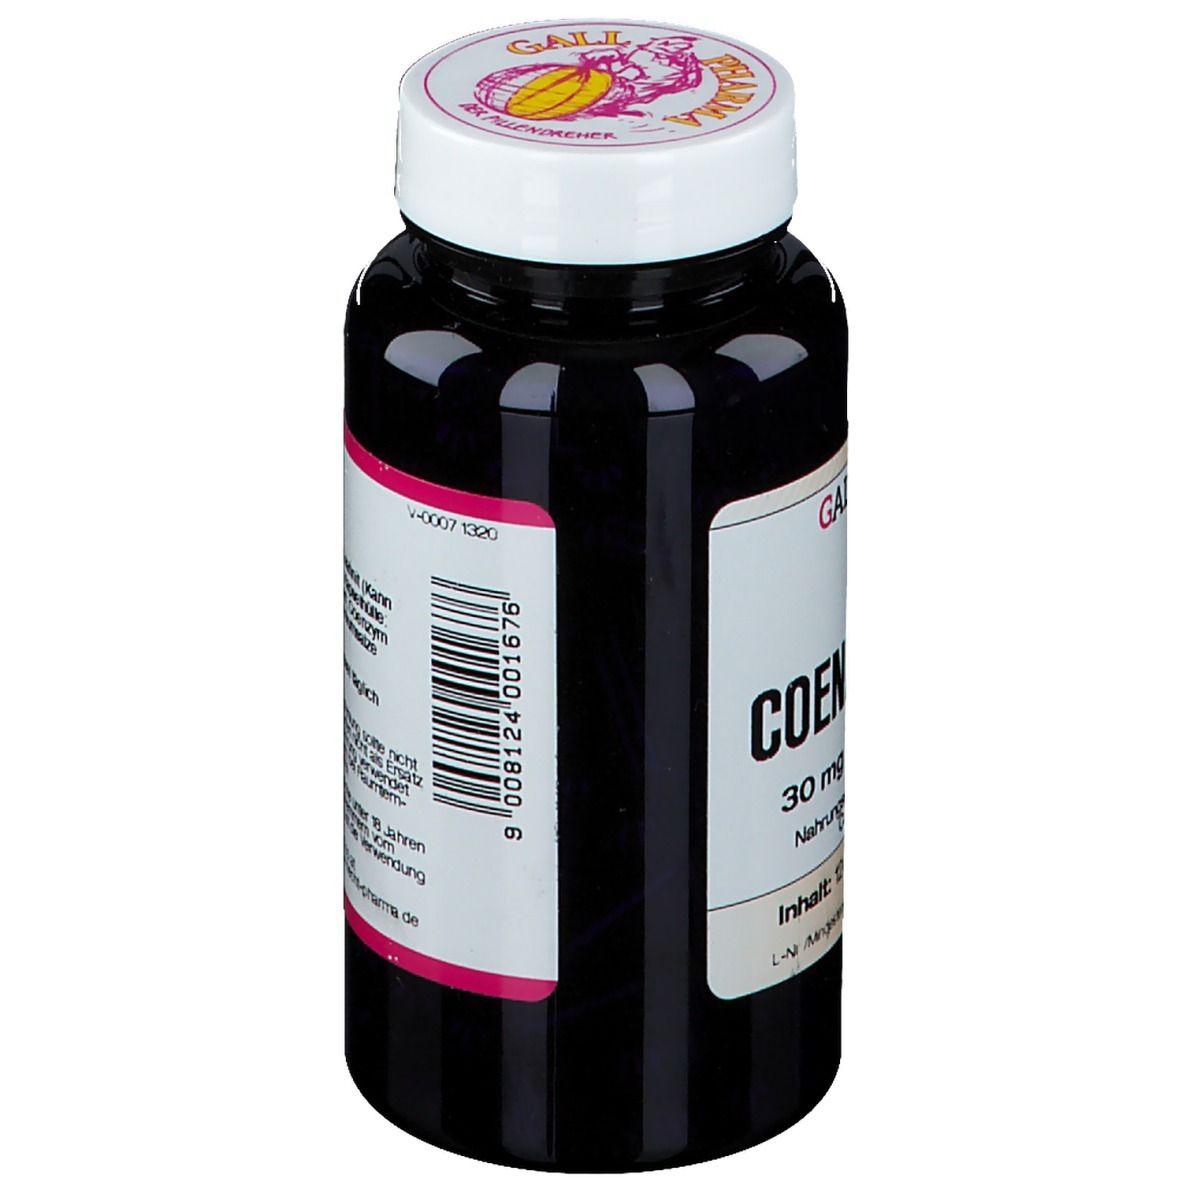 GALL PHARMA Coenzym Q-10 30 mg GPH Kapseln